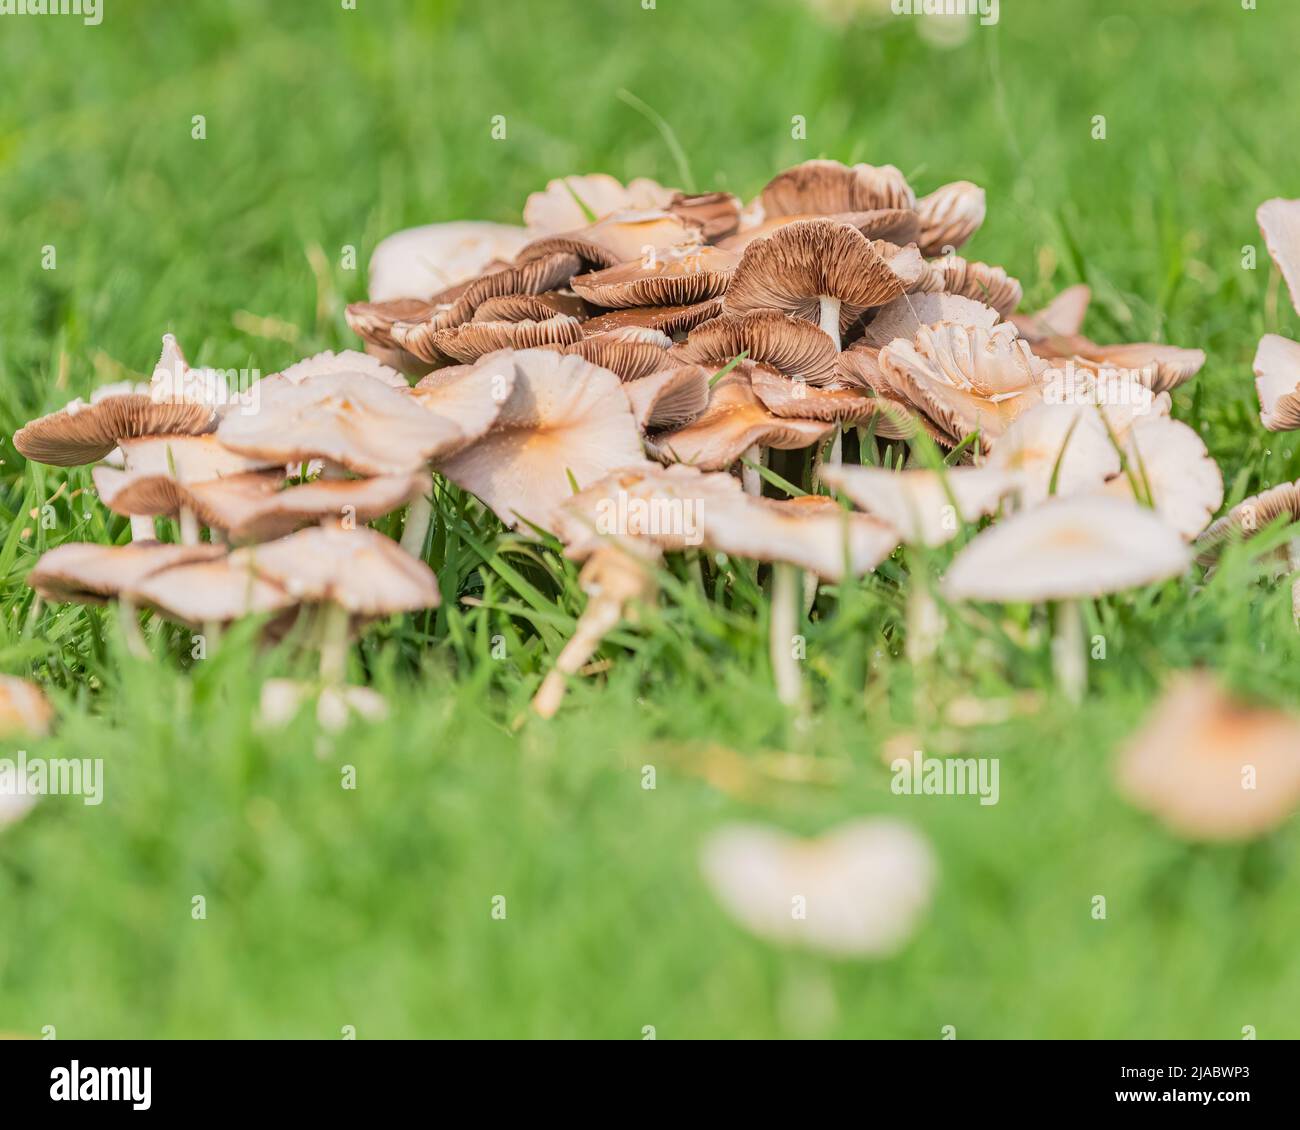 Wild Mushroom in grass in the garden Stock Photo